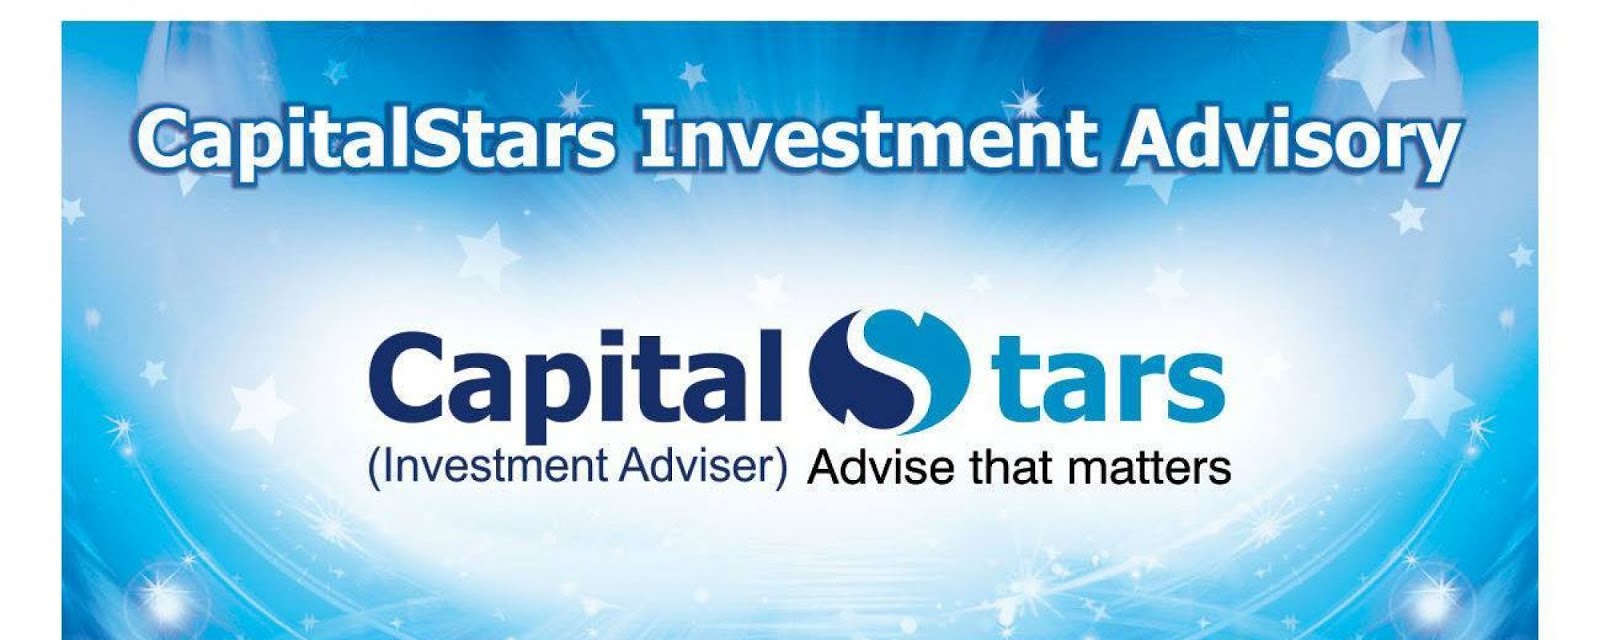 Capitalstars Investment Advisory